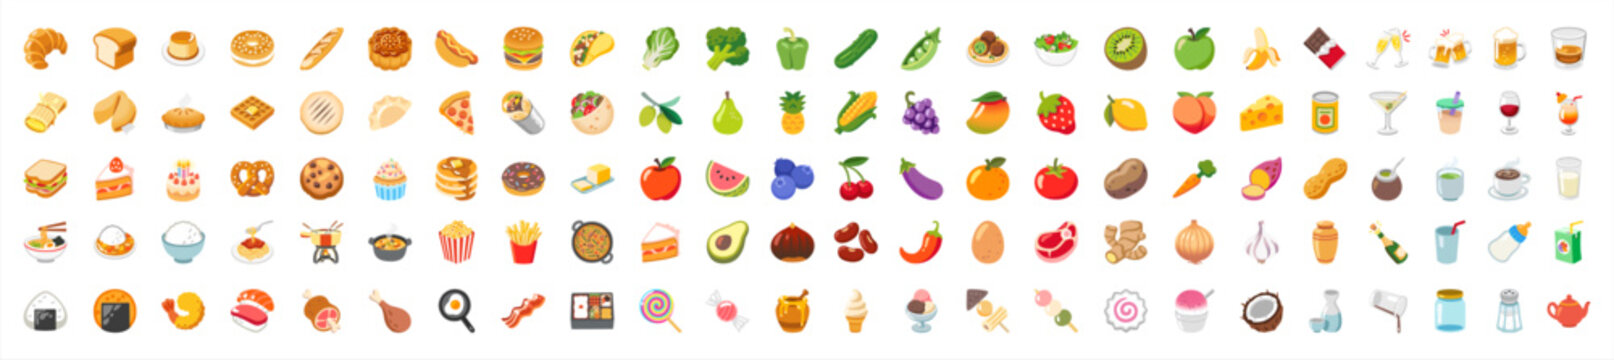 Naklejki Food and fruit vector emoji illustration. Food and beverages, fruits symbols, emojis, emoticons, stickers, icons Vegetables, cakes, vector illustration flat icons set, collection. Vector illustration.